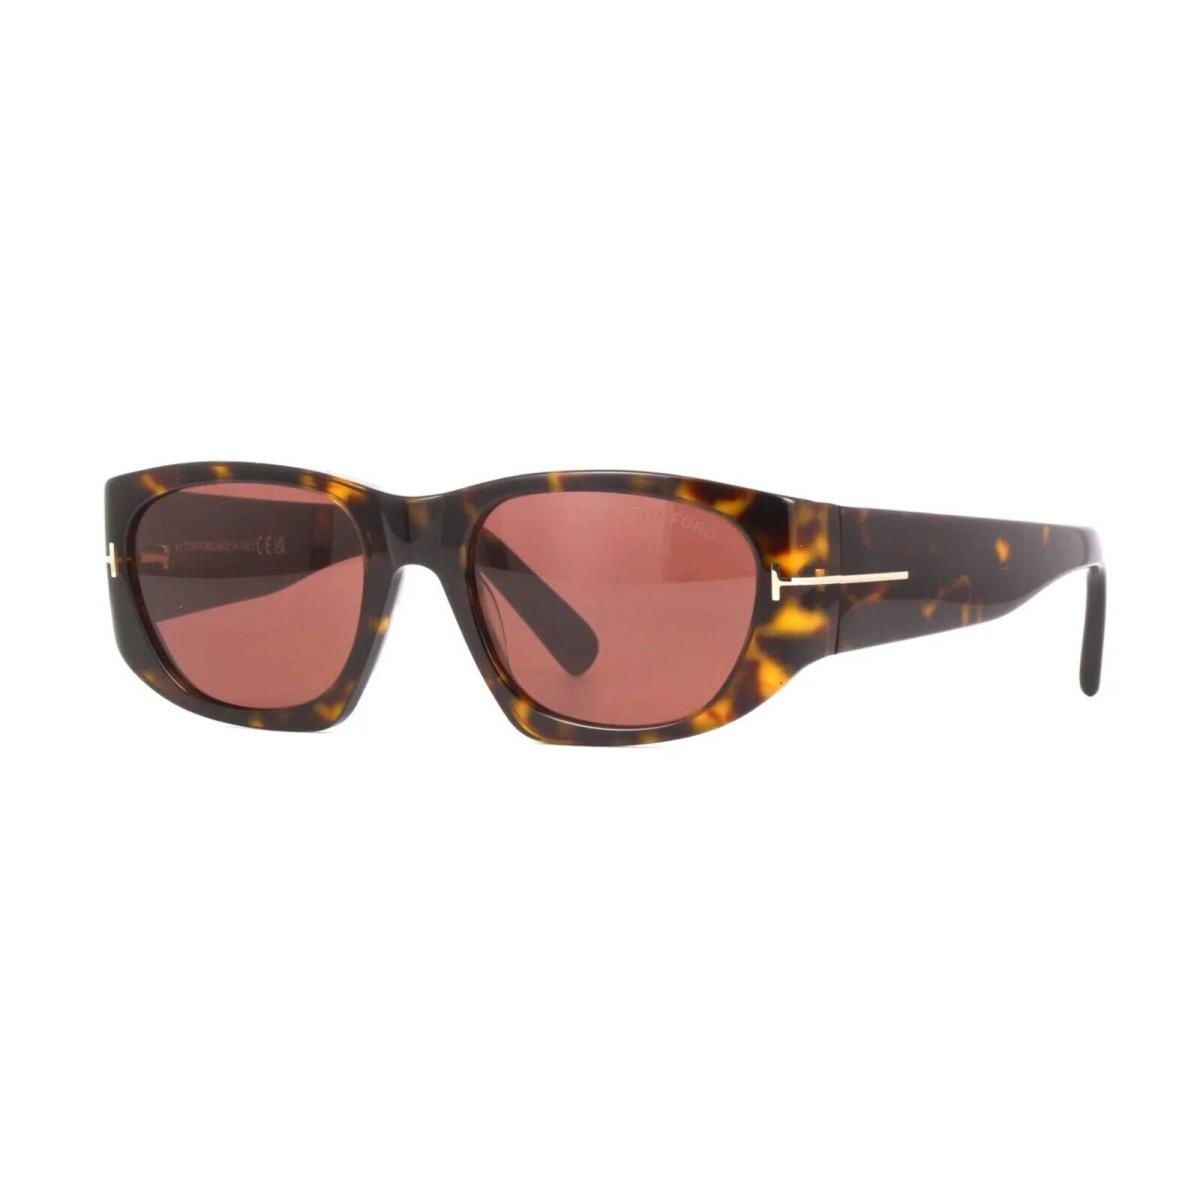 Tom Ford CYRILLE-02 FT 0987 Dark Havana/burgundy 52S Sunglasses - Dark Havana Frame, Burgundy Lens